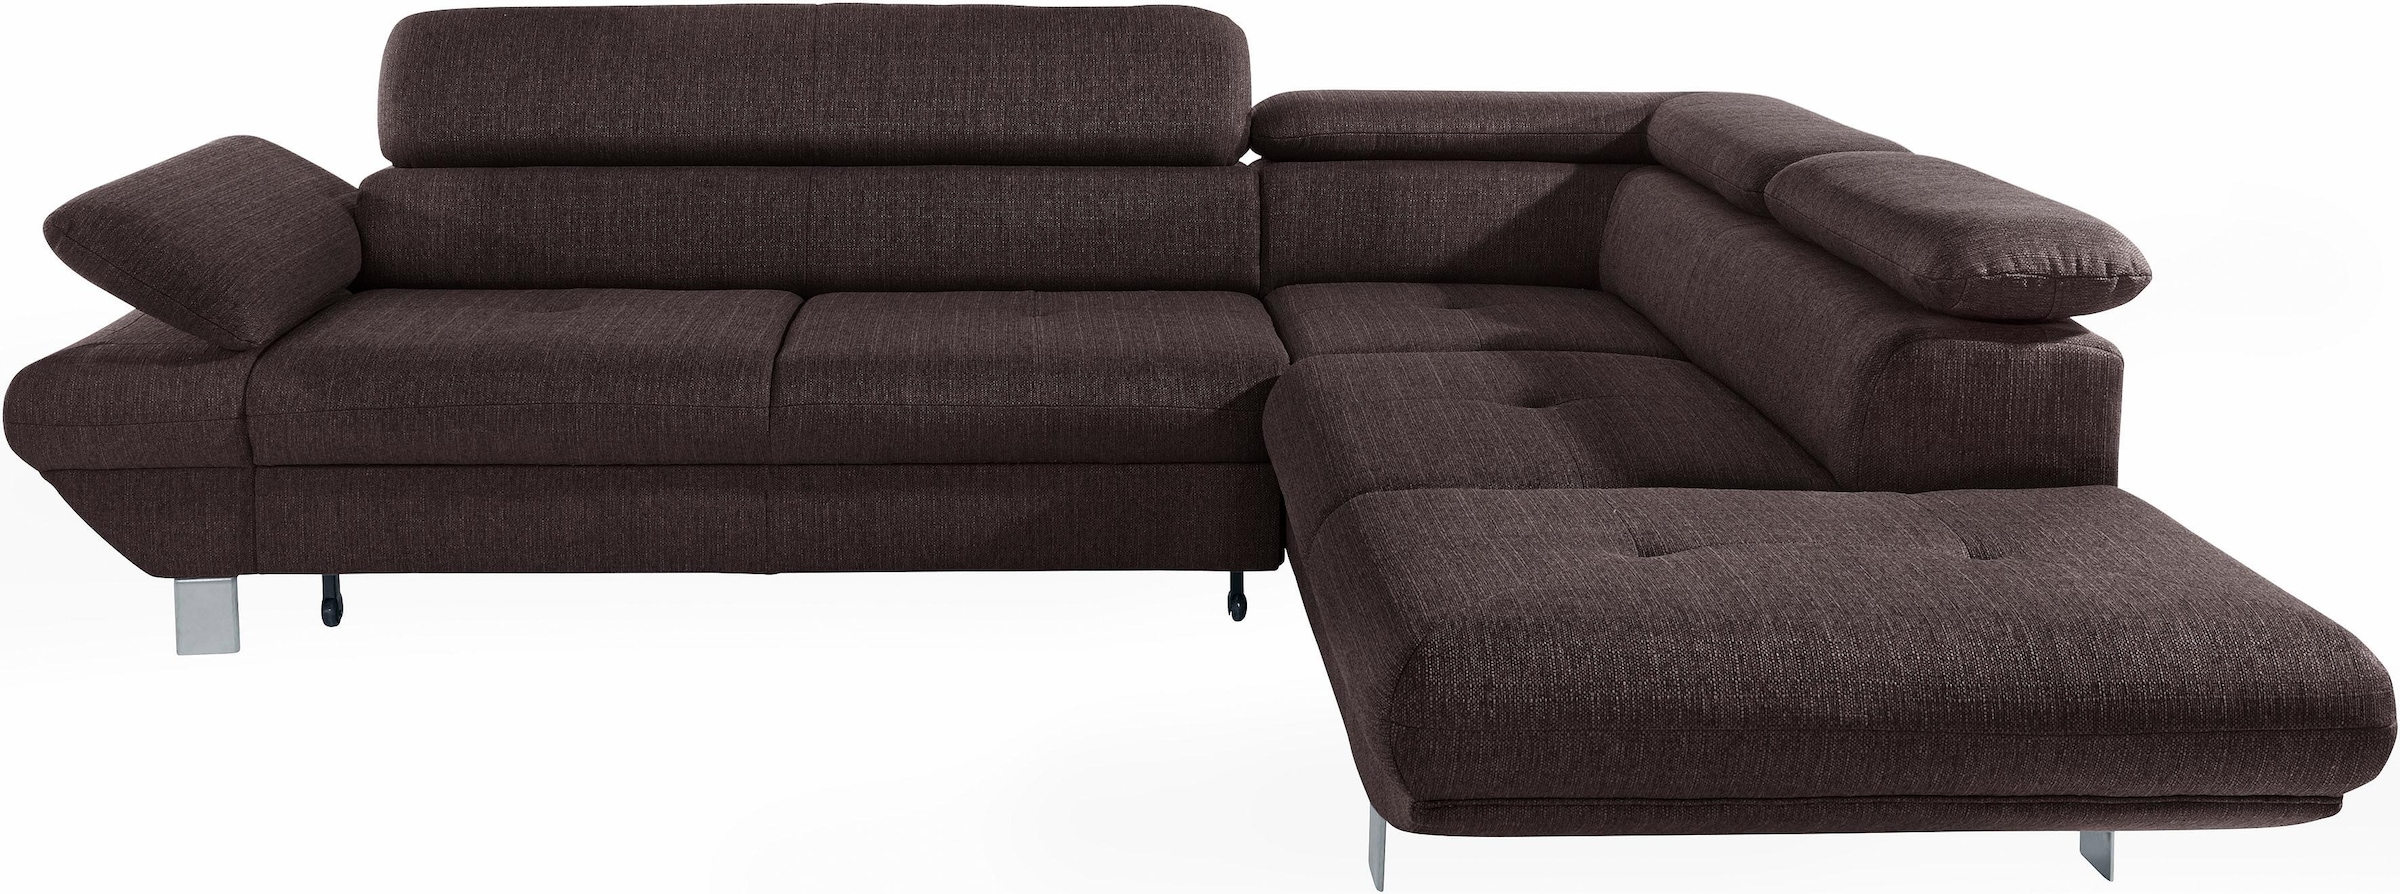 fashion - BAUR Ecksofa Bettfunktion exxpo mit online kaufen sofa |